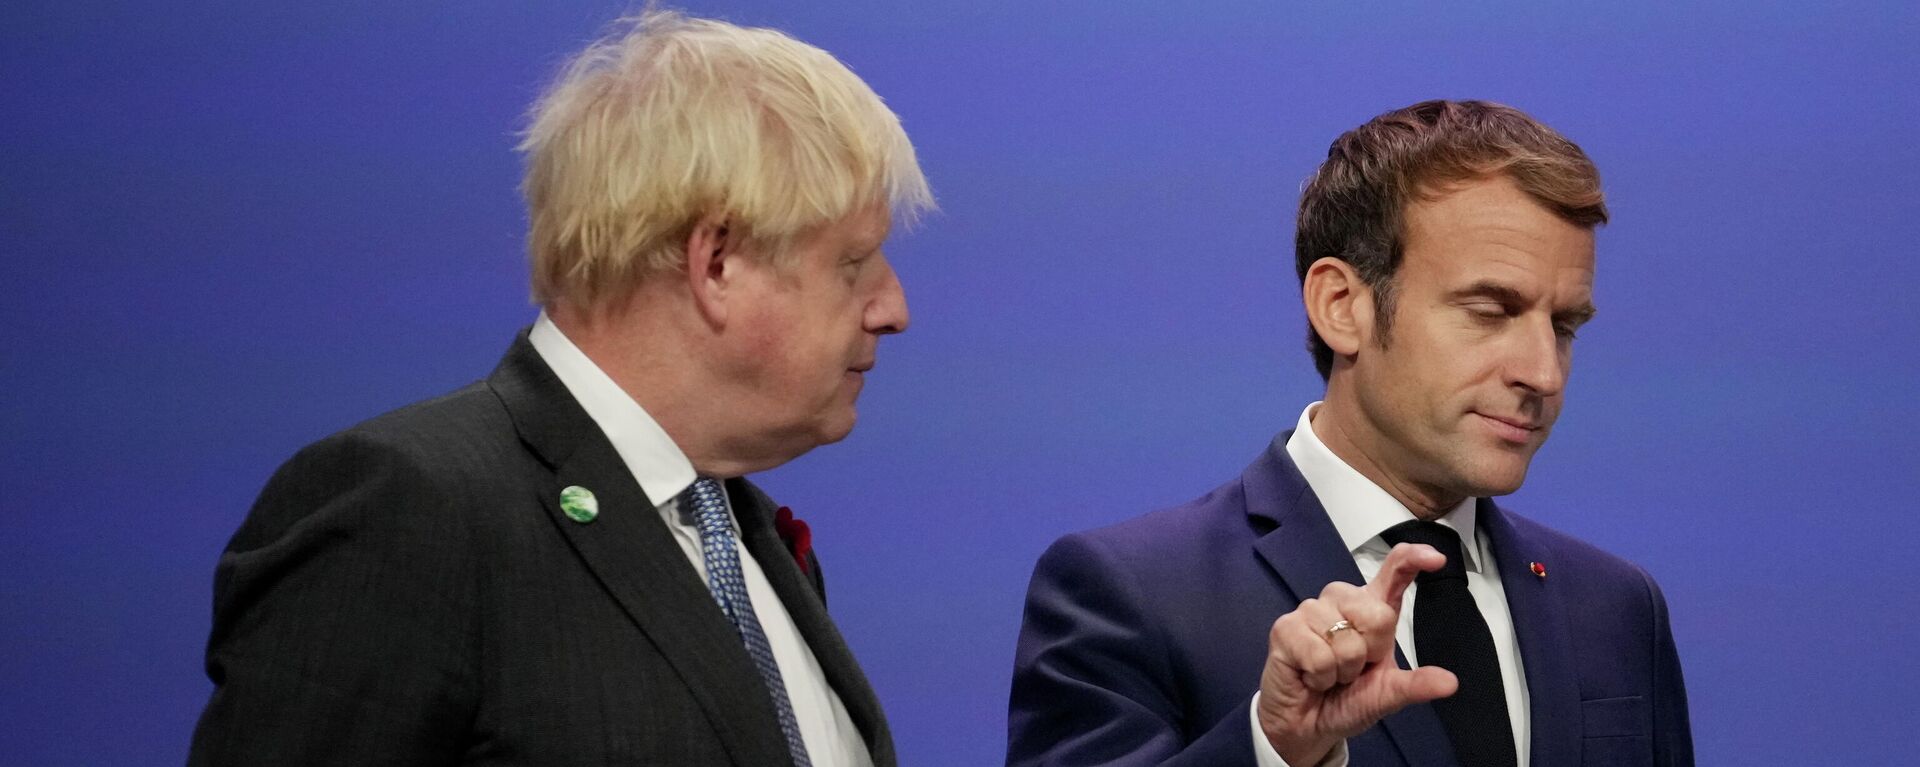 Britain's Prime Minister Boris Johnson greets France's President Emmanuel Macron during arrivals at the UN Climate Change Conference (COP26) in Glasgow, Scotland, Britain, November 1, 2021. Christopher Furlong/Pool via REUTERS - Sputnik International, 1920, 27.11.2021